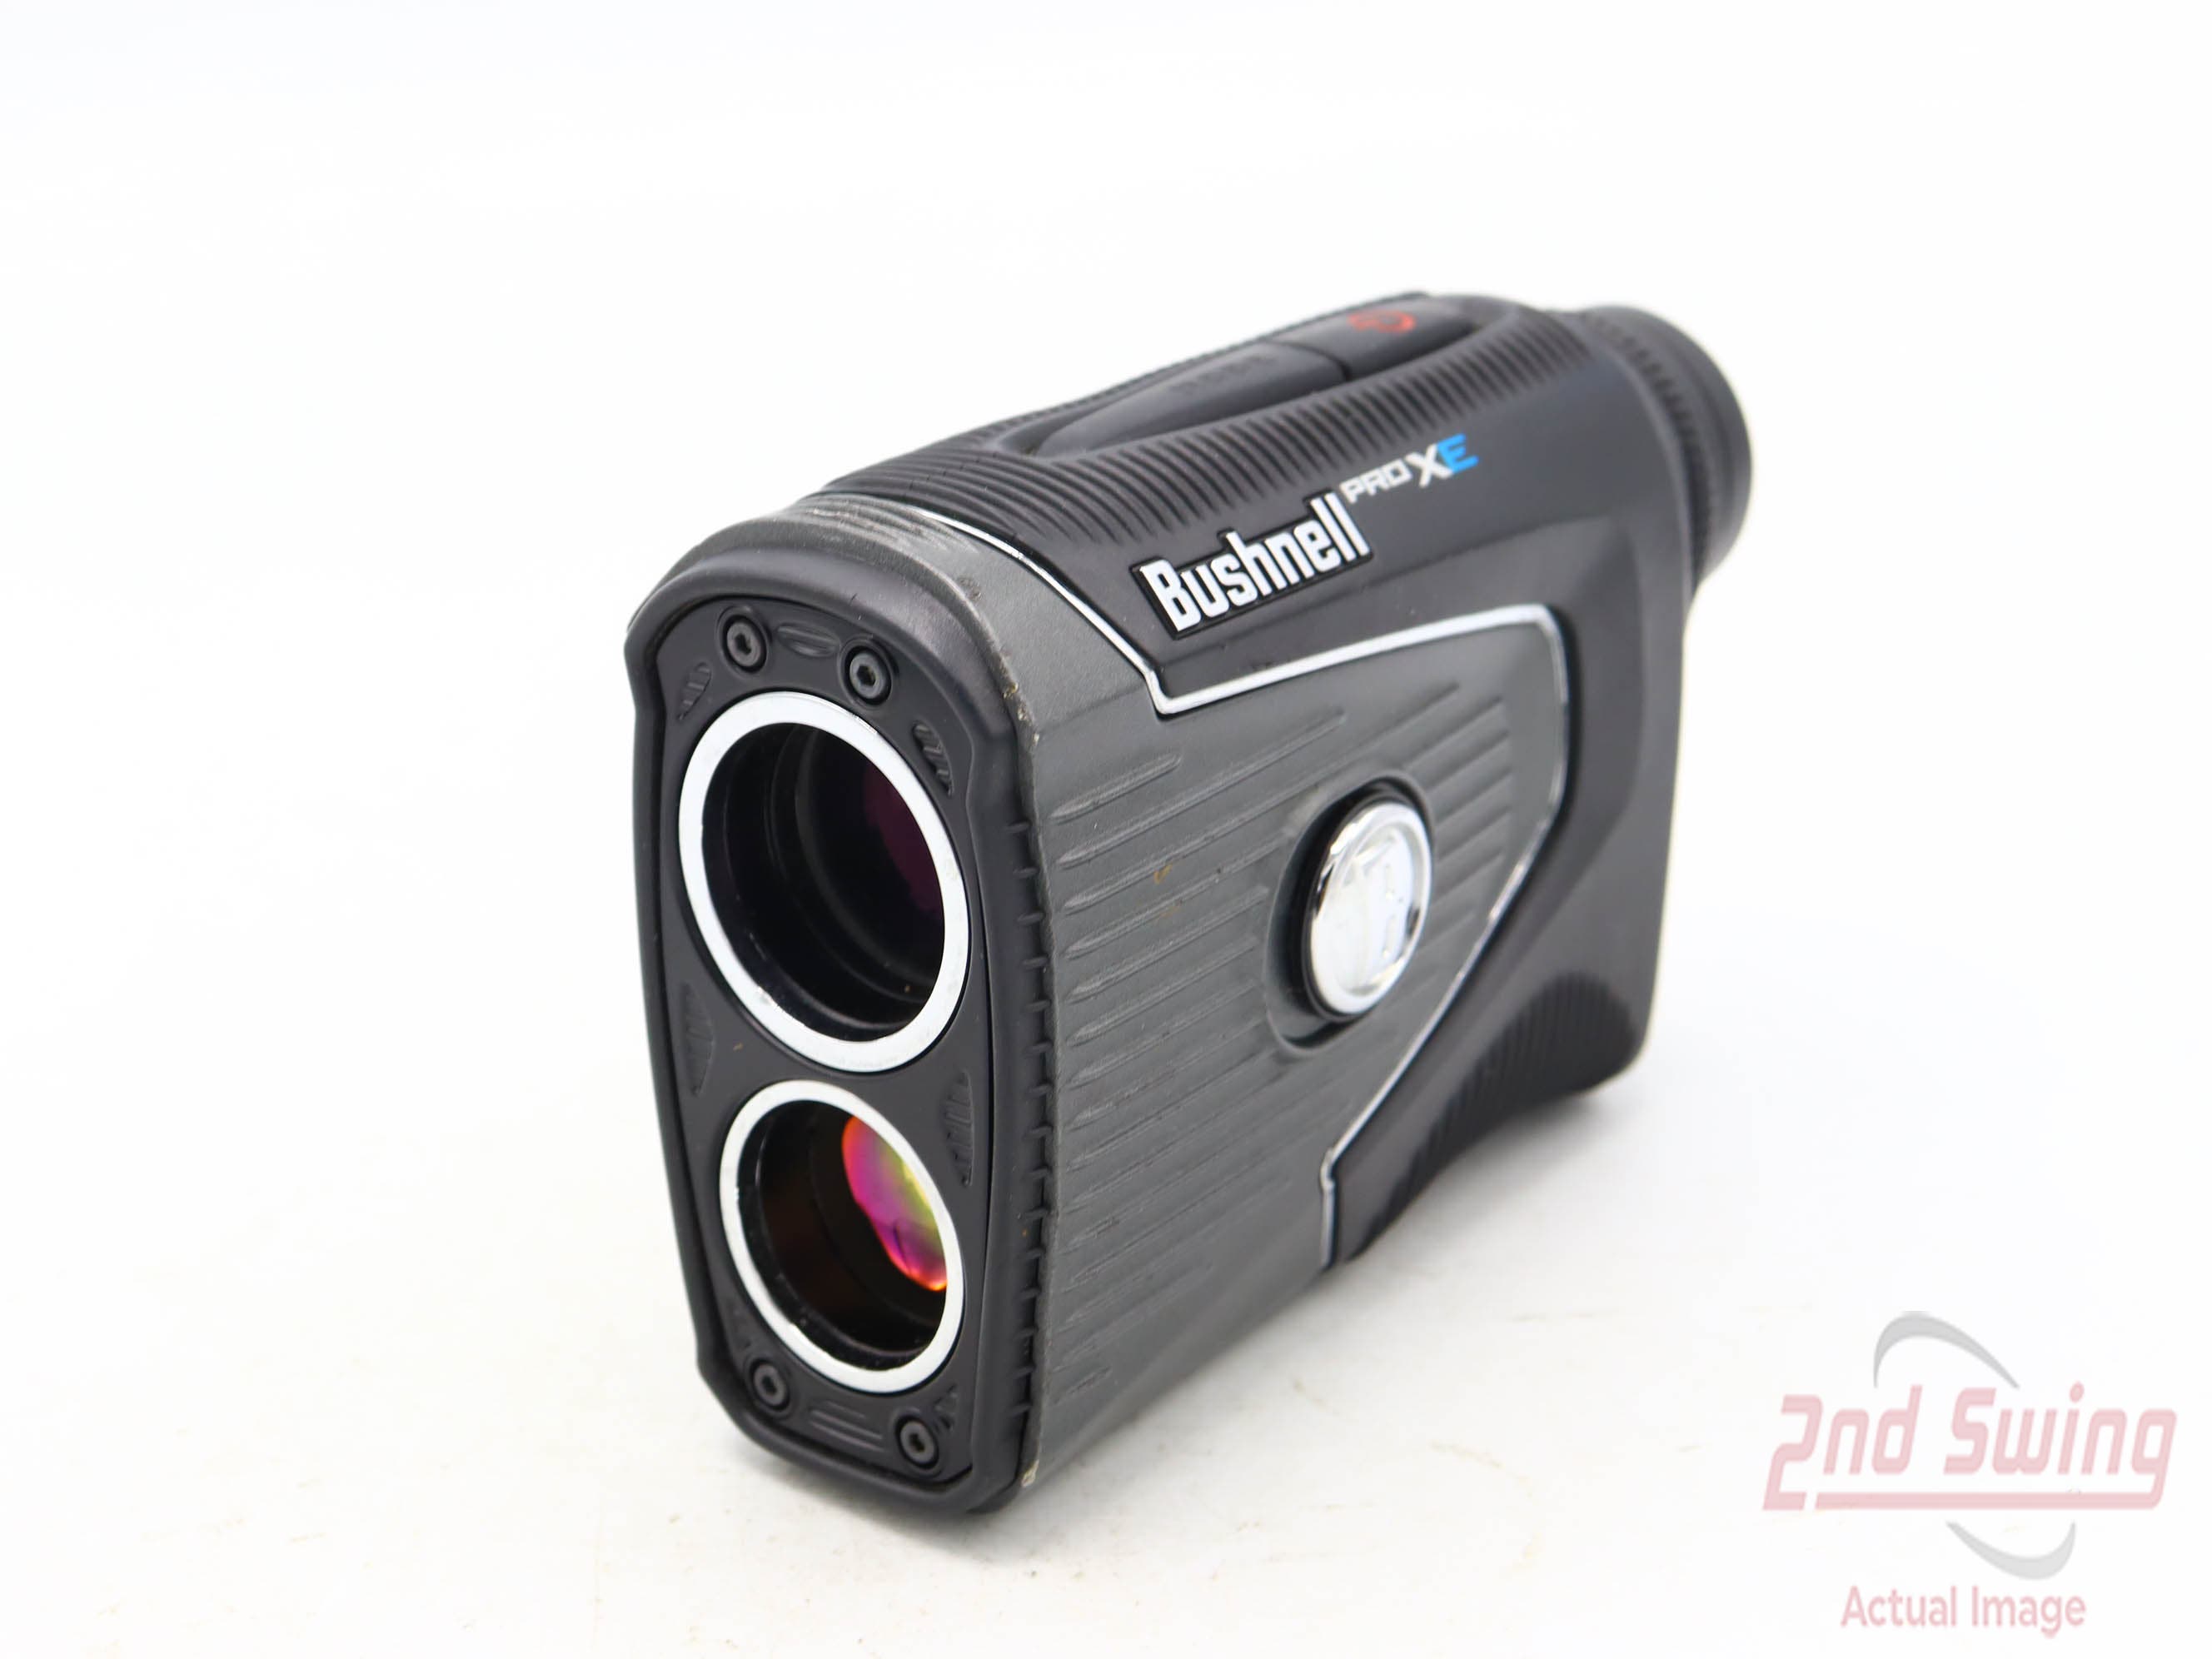 Bushnell Pro XE Golf GPS & Rangefinders (D-92334051978)